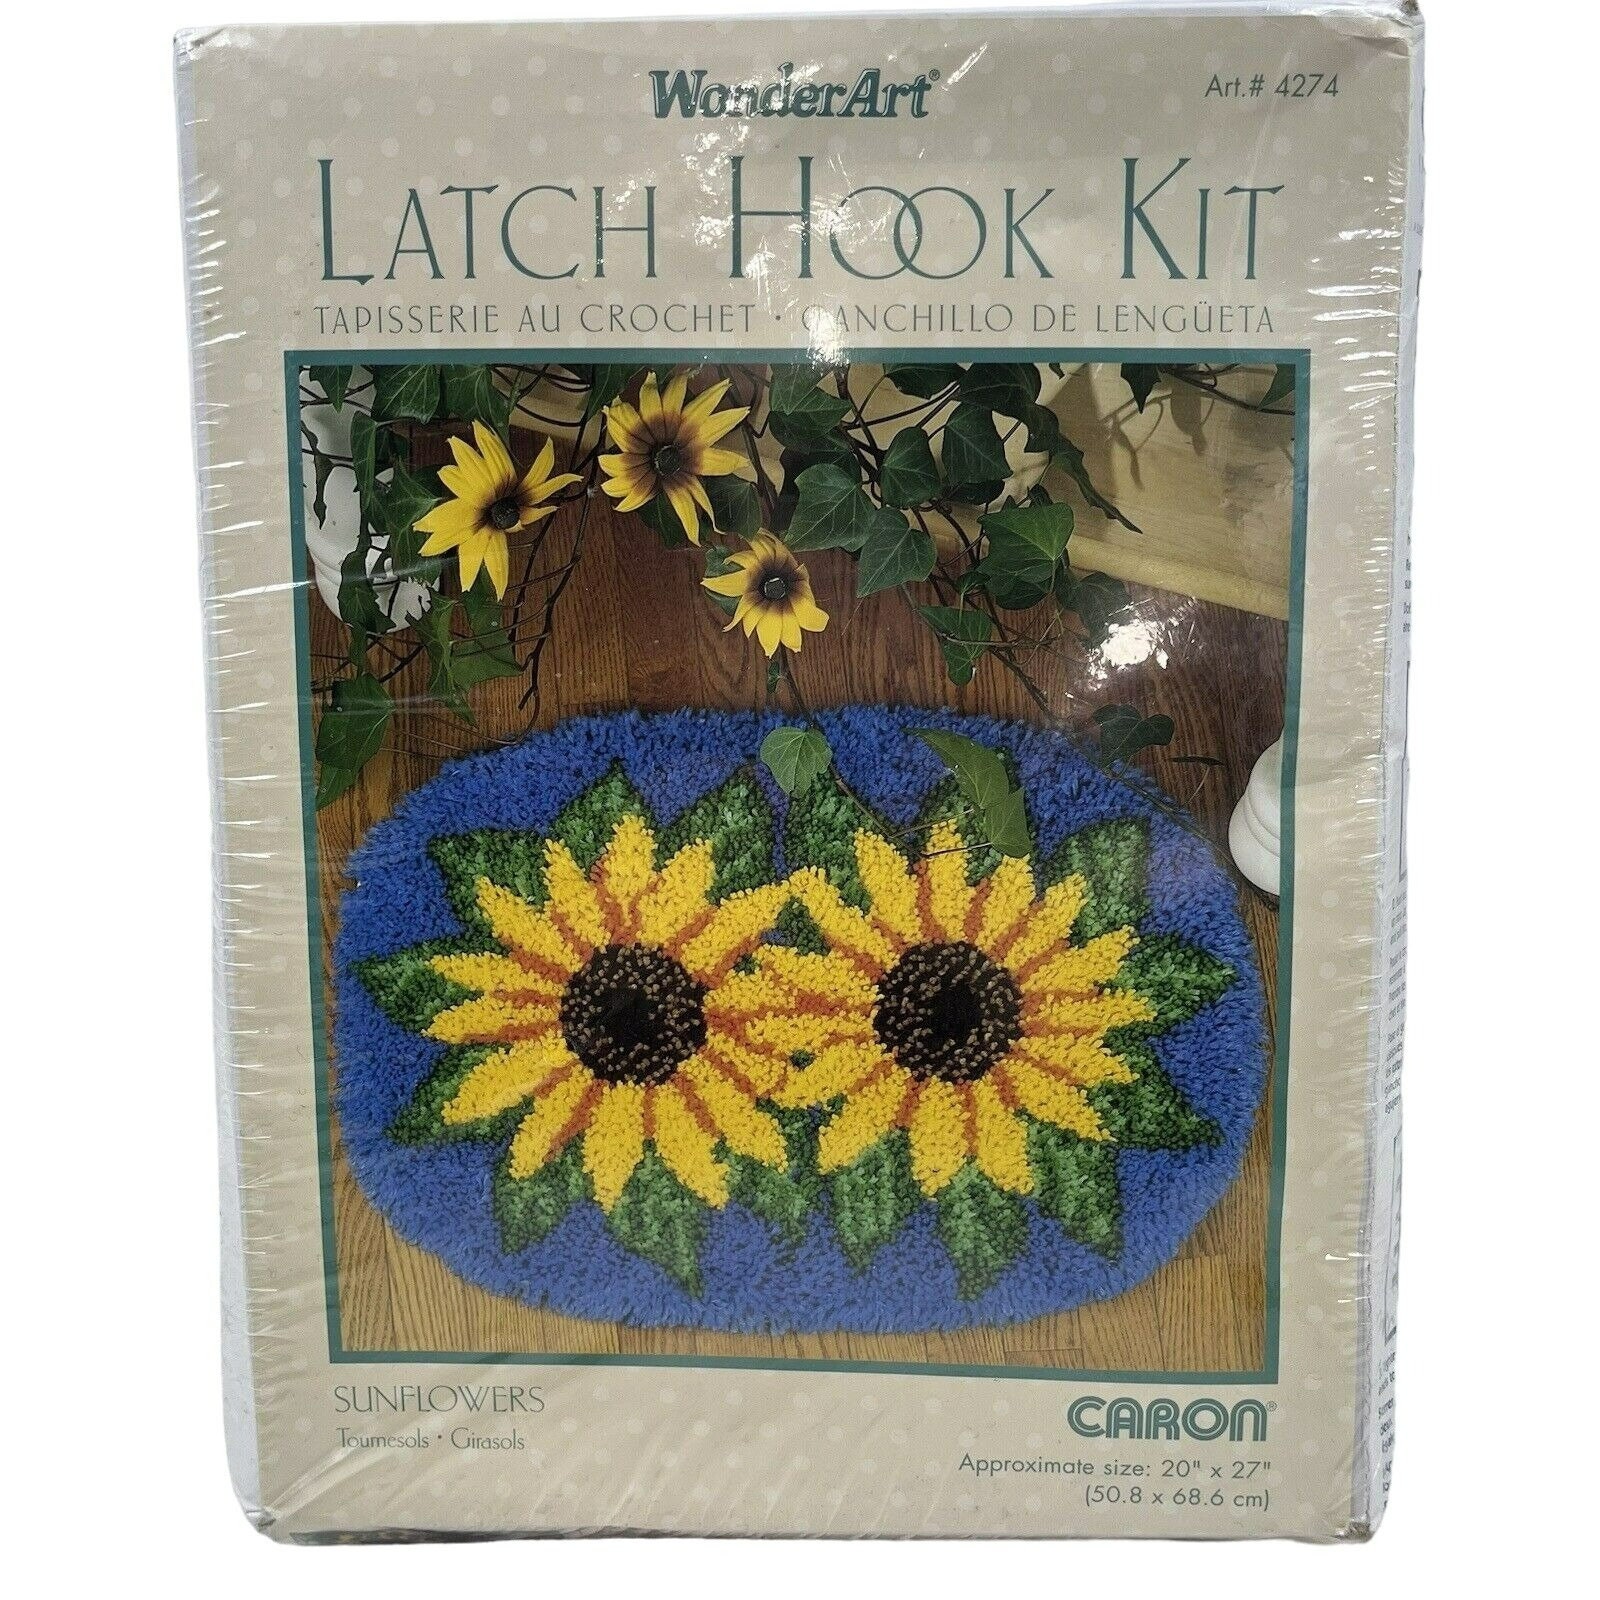 Vintage Sunflower Latch Hook Rug Kit Oval 20x27 Wonder Art Etsy Denmark